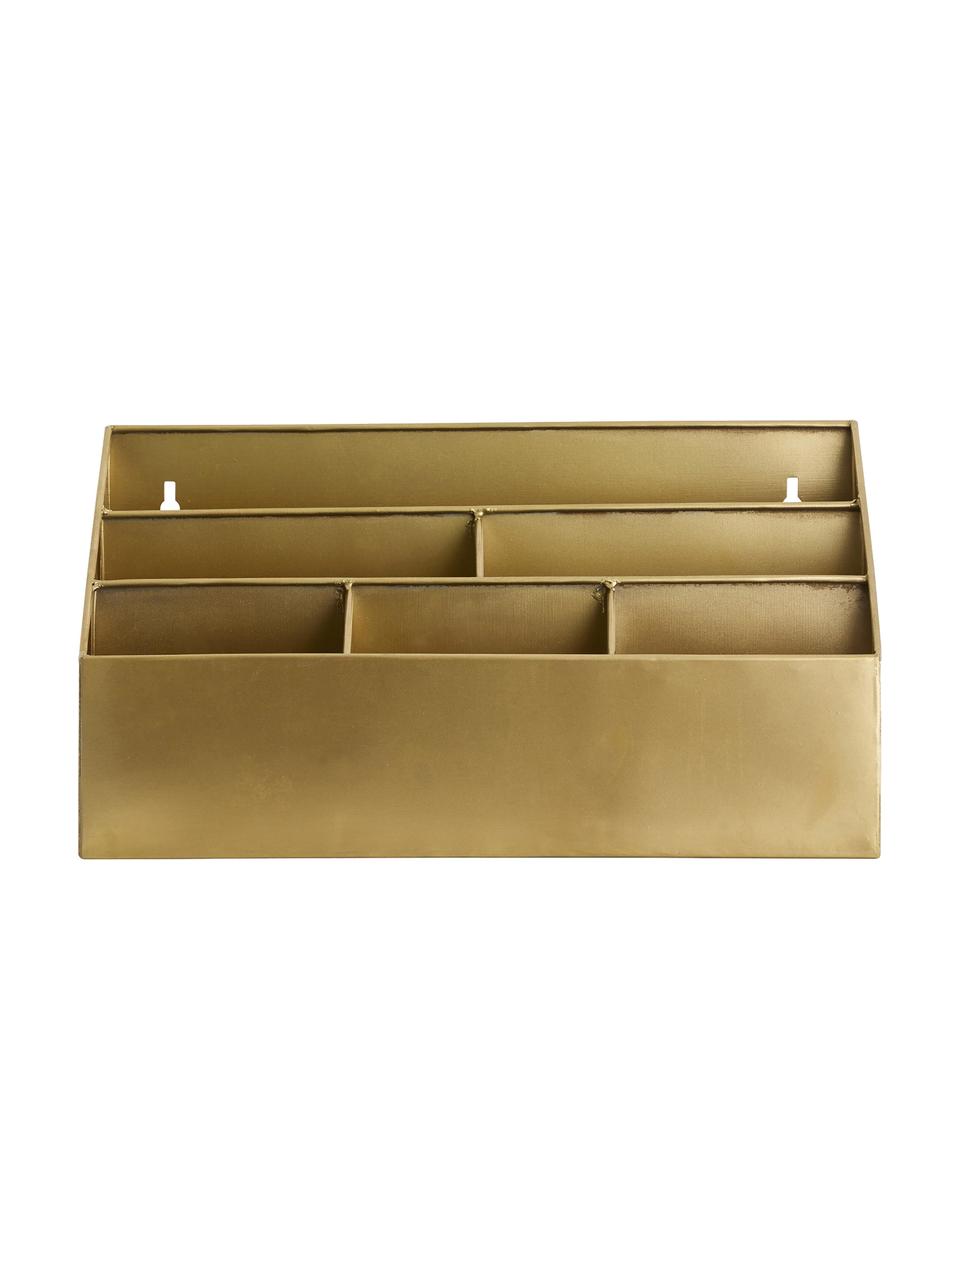 Büro-Organizer Adasi mit Wandaufhängung, Metall, Goldfarben, B 40 x H 21 cm